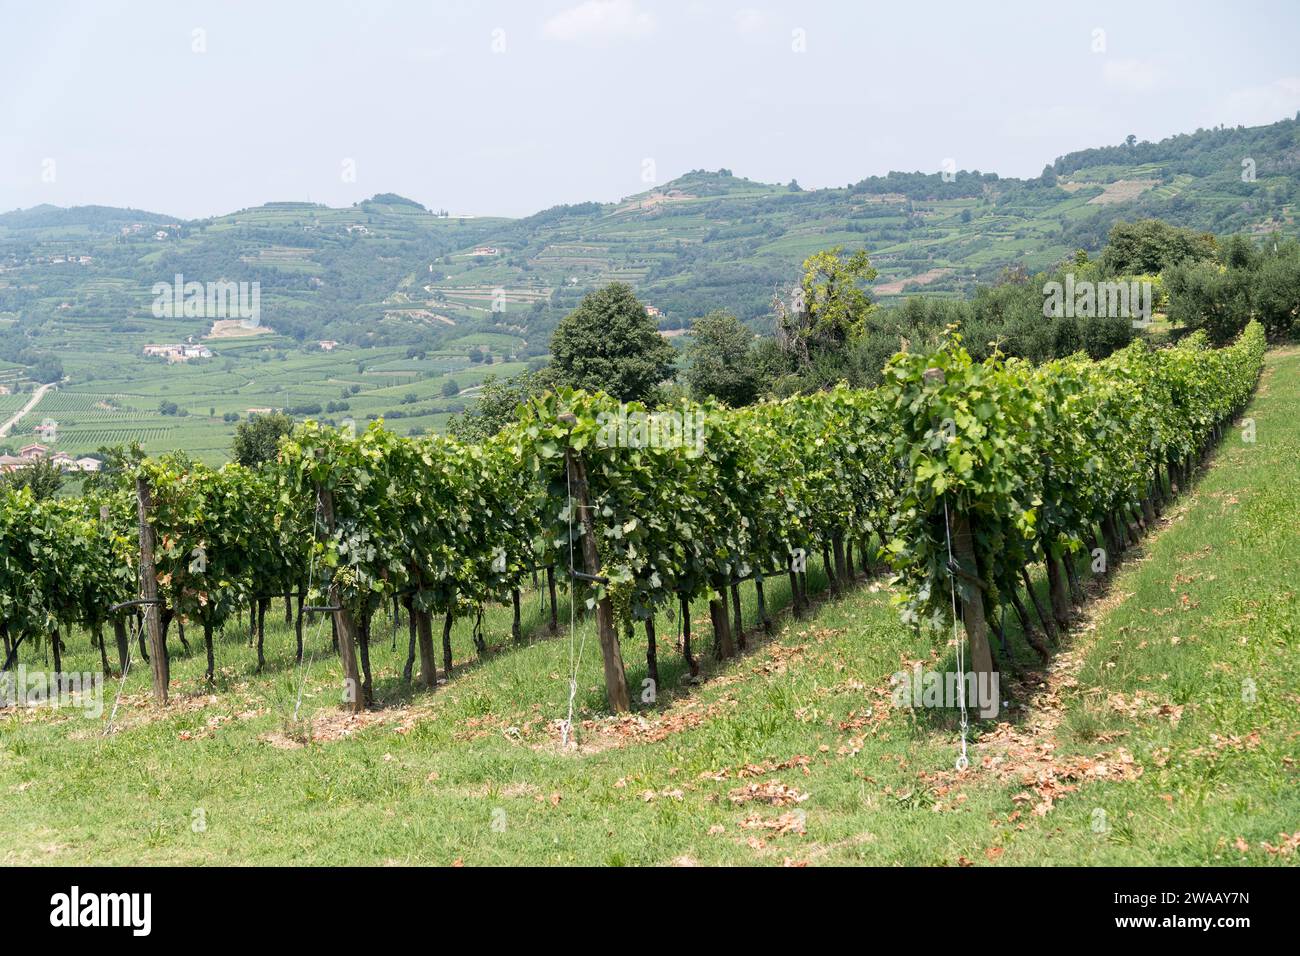 Wineyard of Soave wine in Soave, Province of Verona, Veneto, Italy© Wojciech Strozyk / Alamy Stock Photo *** Local Caption *** Stock Photo